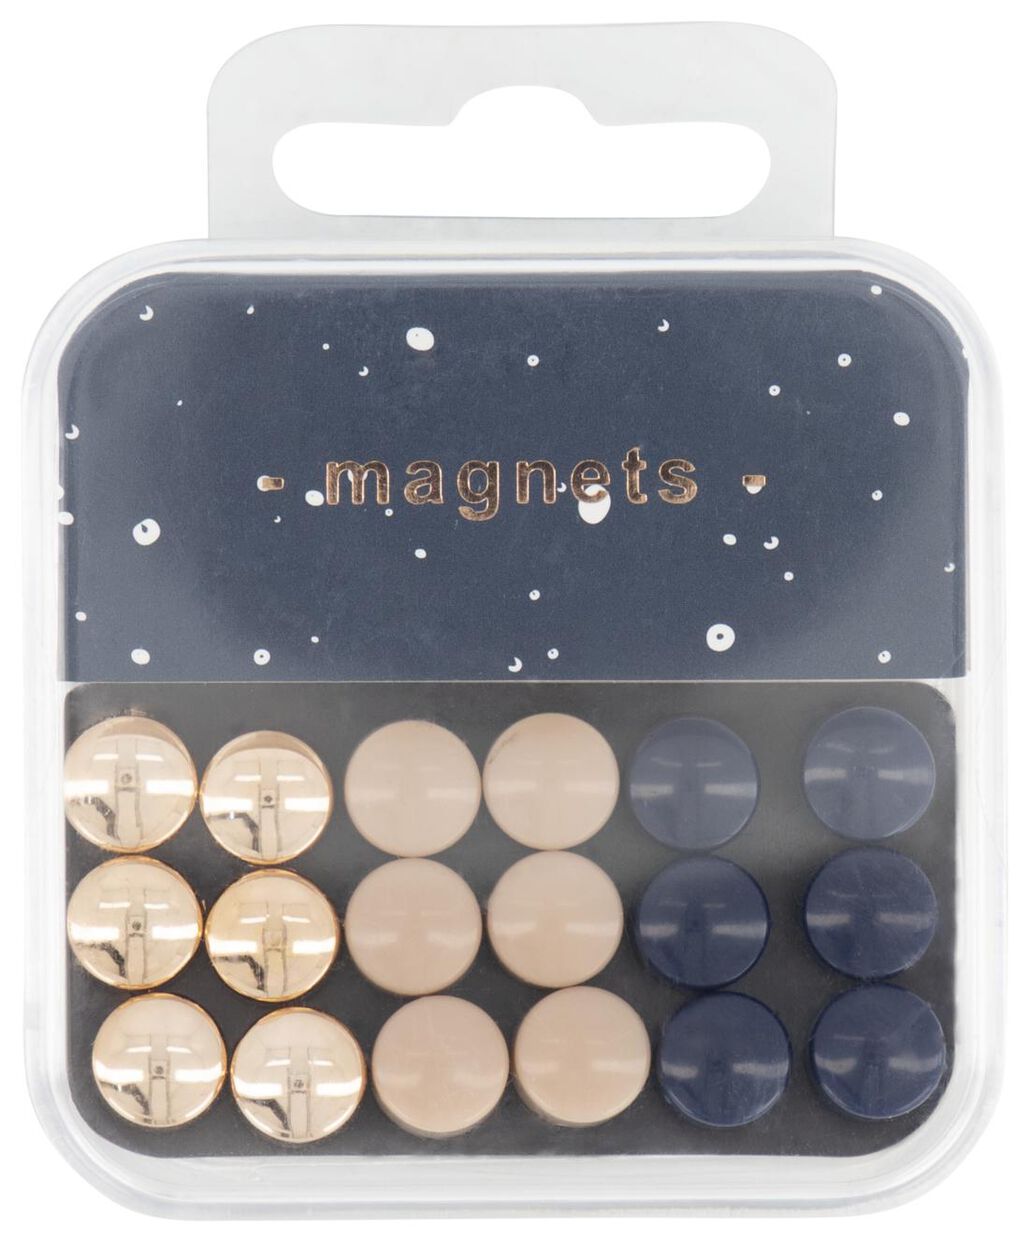 mini magneten - 18 stuks - HEMA